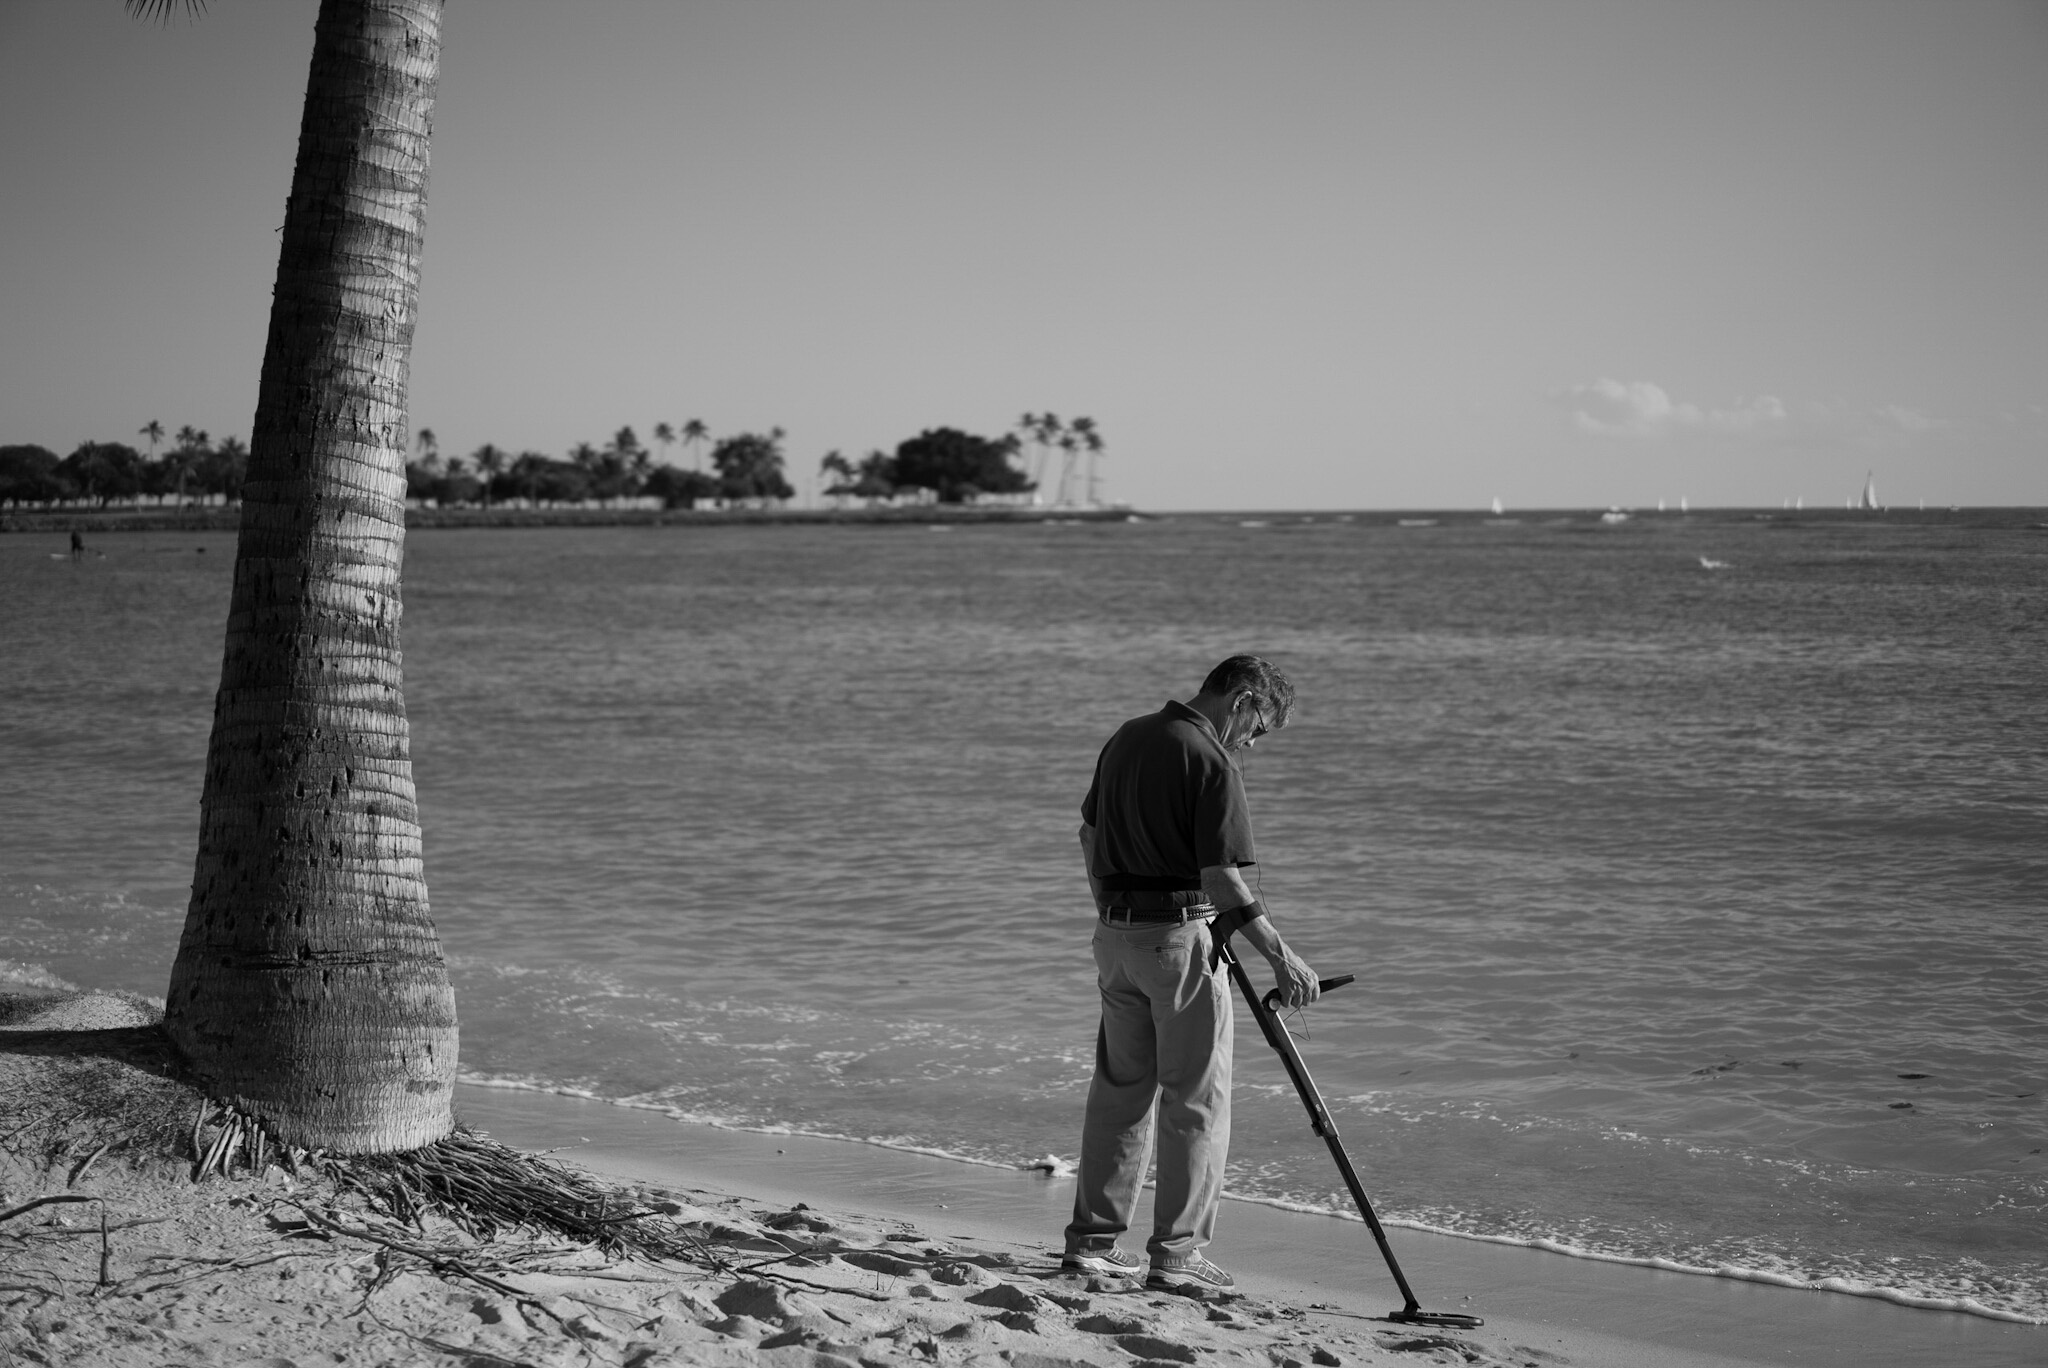 Le chercheur d'or - Ala Moana beach, Oahu